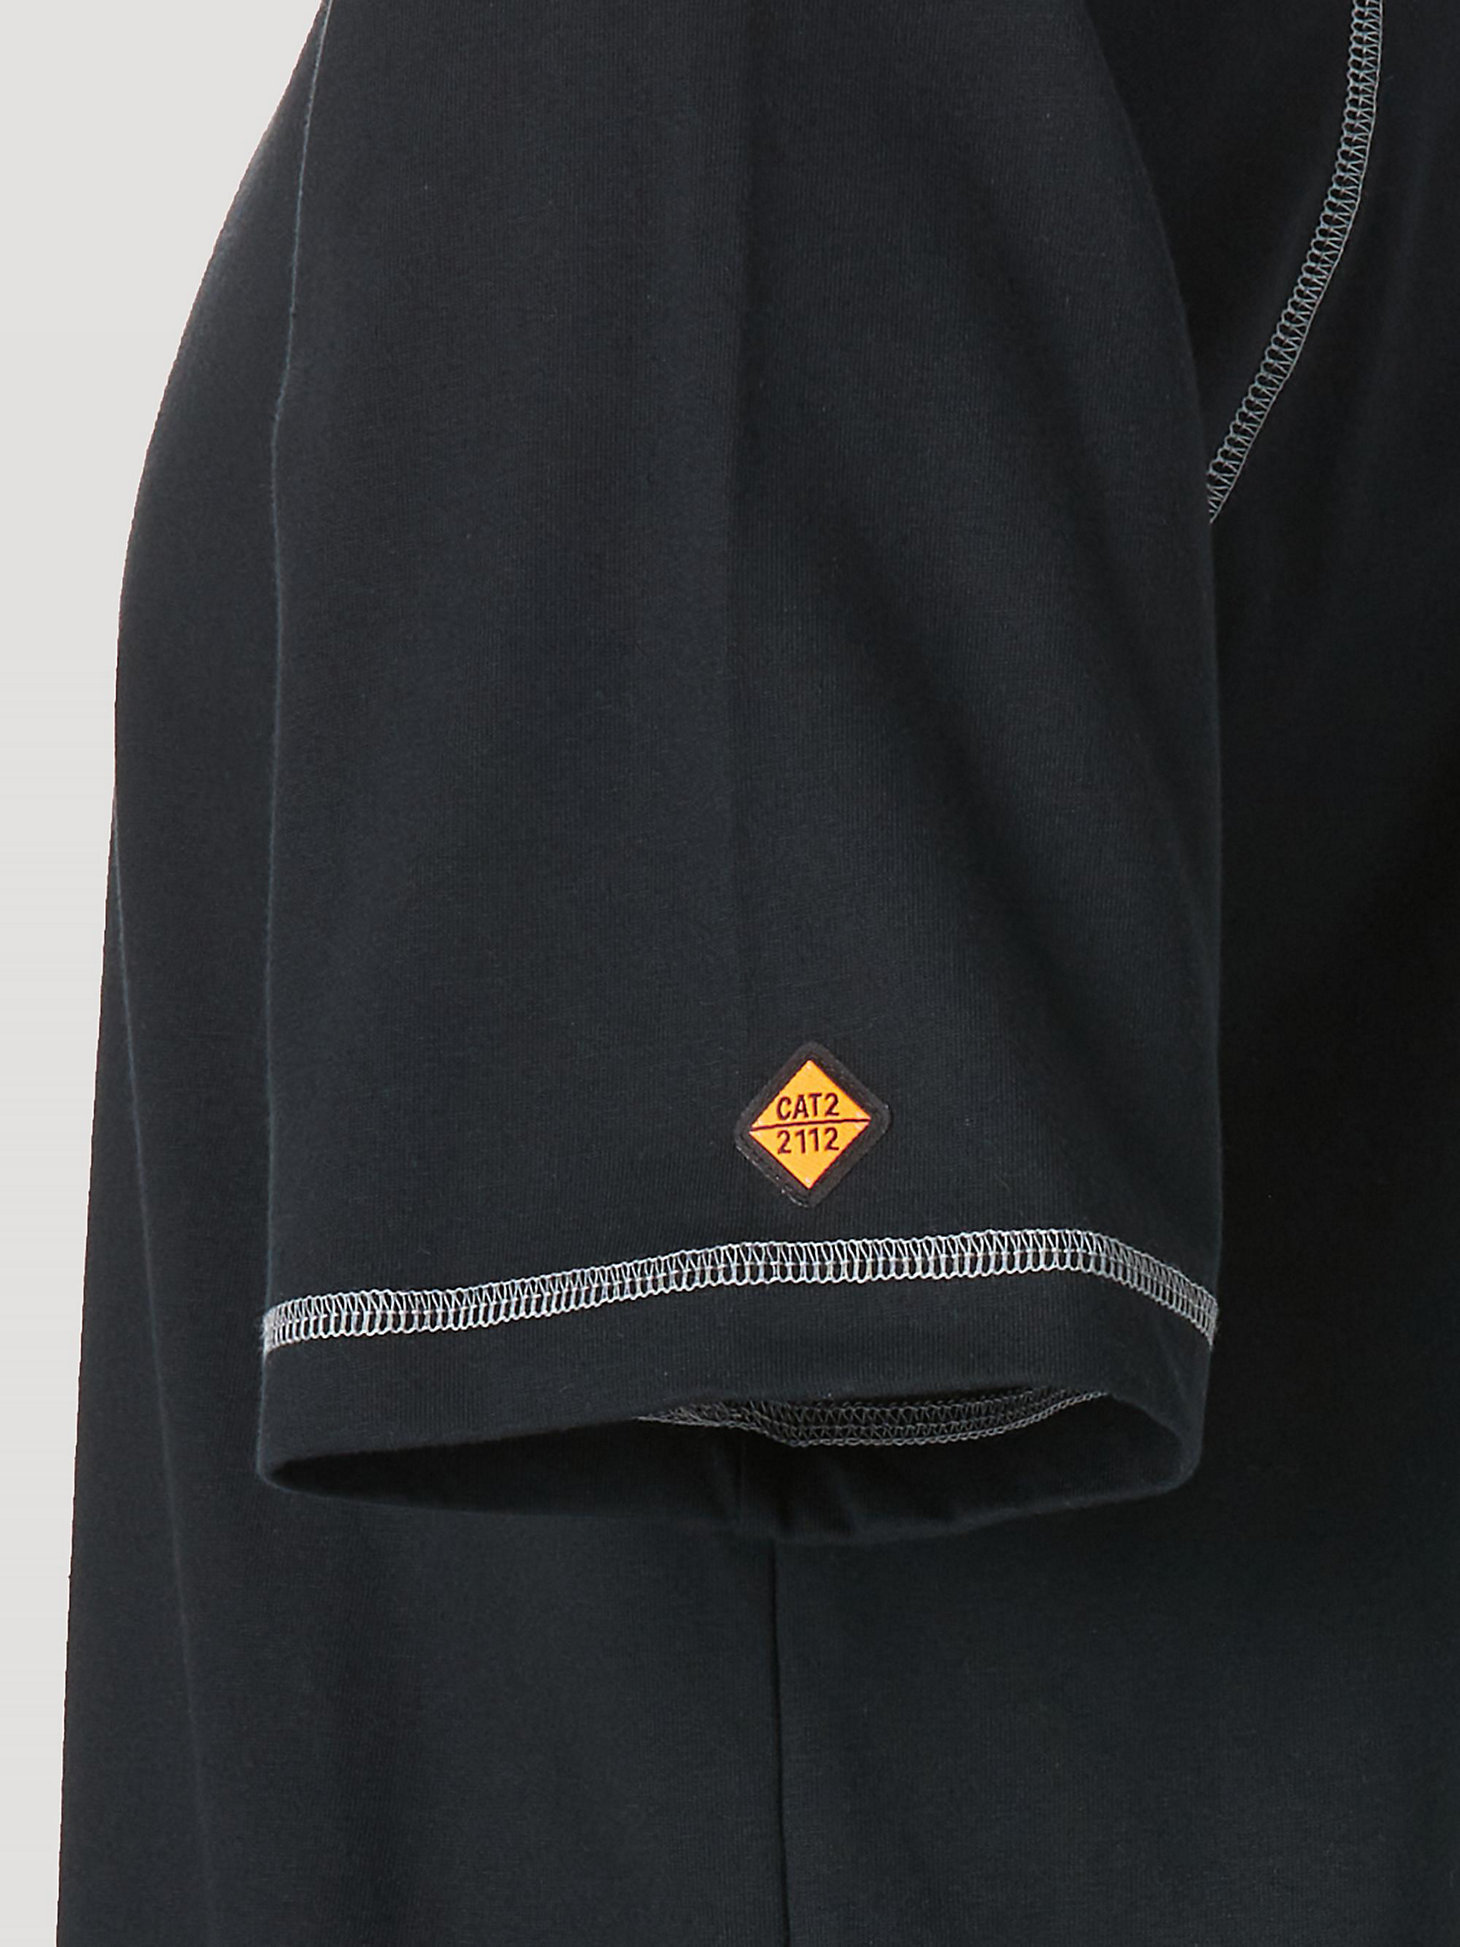 Wrangler® FR Flame Resistant Short Sleeve Base Layer T-Shirt in Black alternative view 3